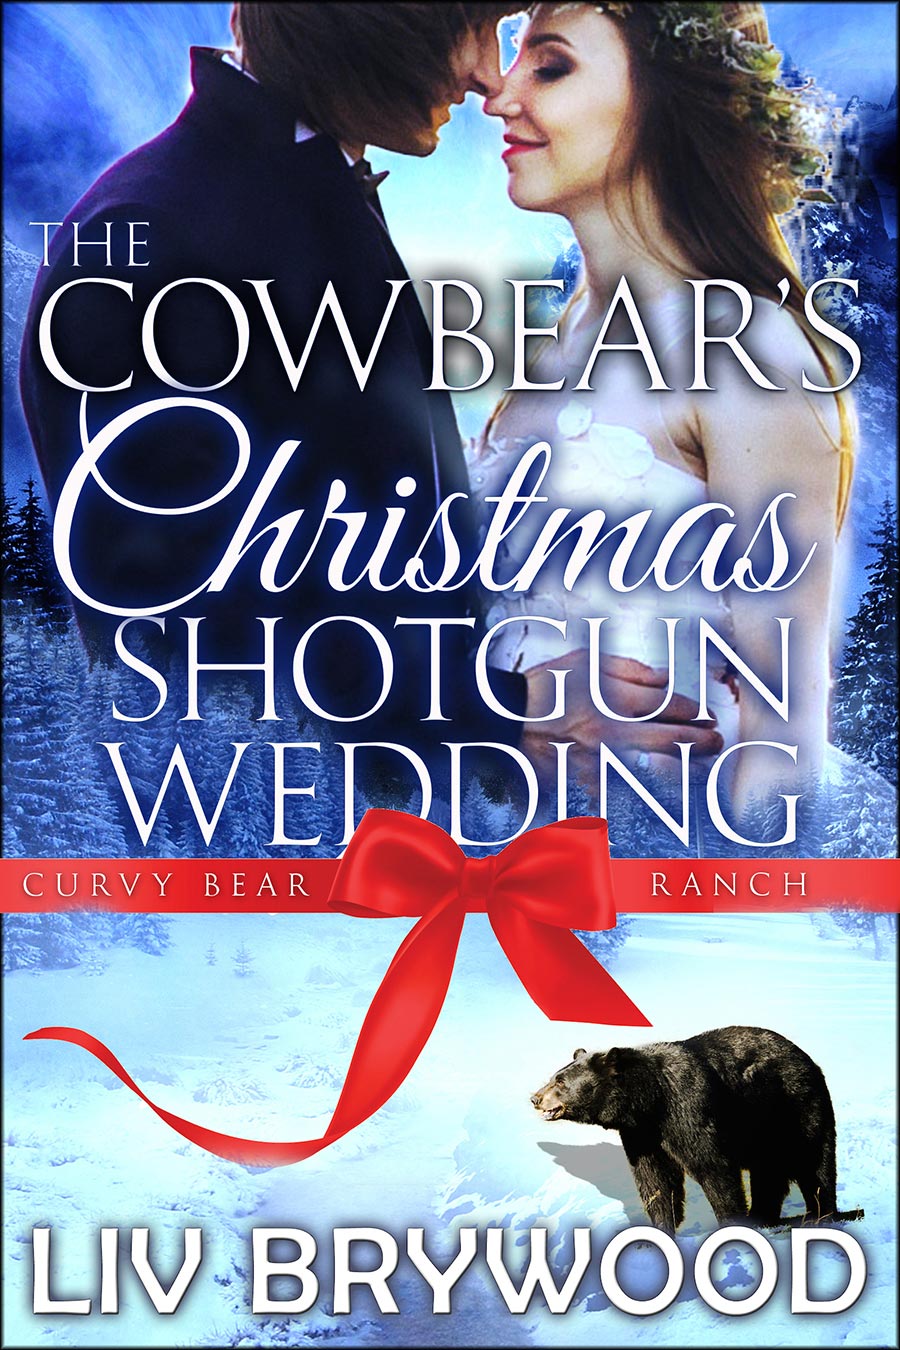 The-Cowbear's-Christmas-Shotgun-Wedding-1600.jpg